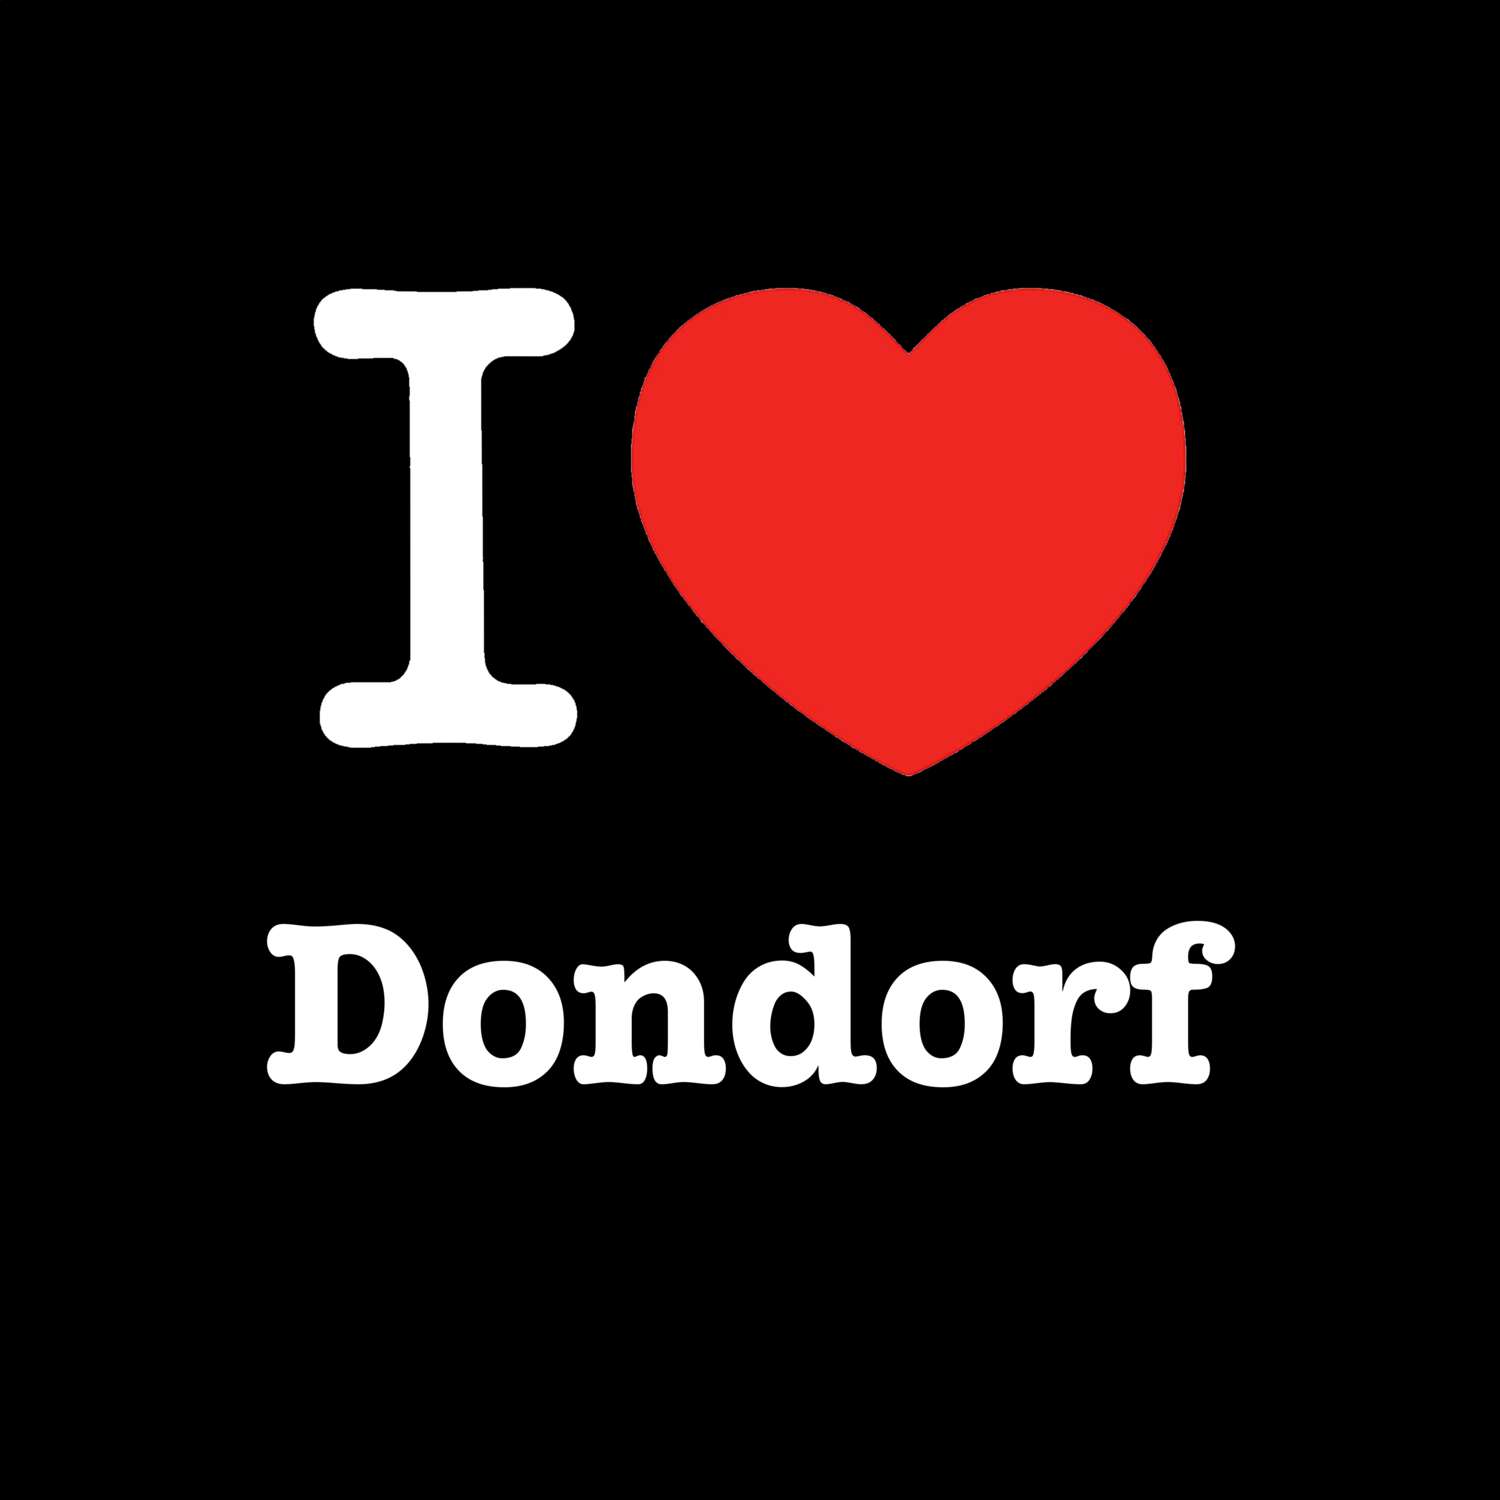 Dondorf T-Shirt »I love«